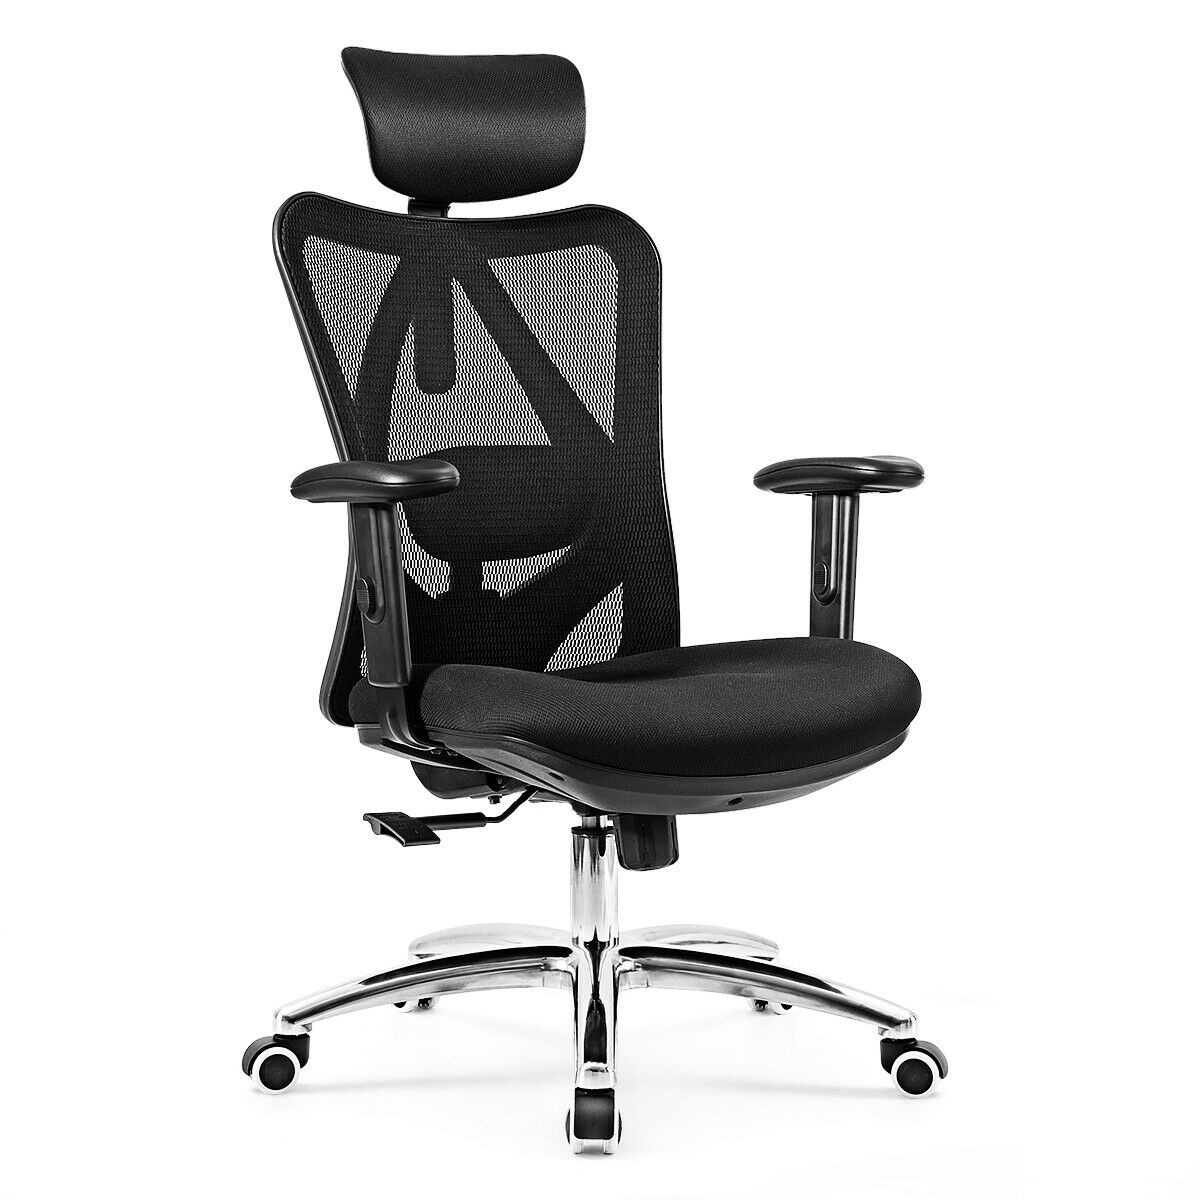 Adjustable Height Mesh Swivel High Back Office Chair Office Chairs Office Furniture Furniture